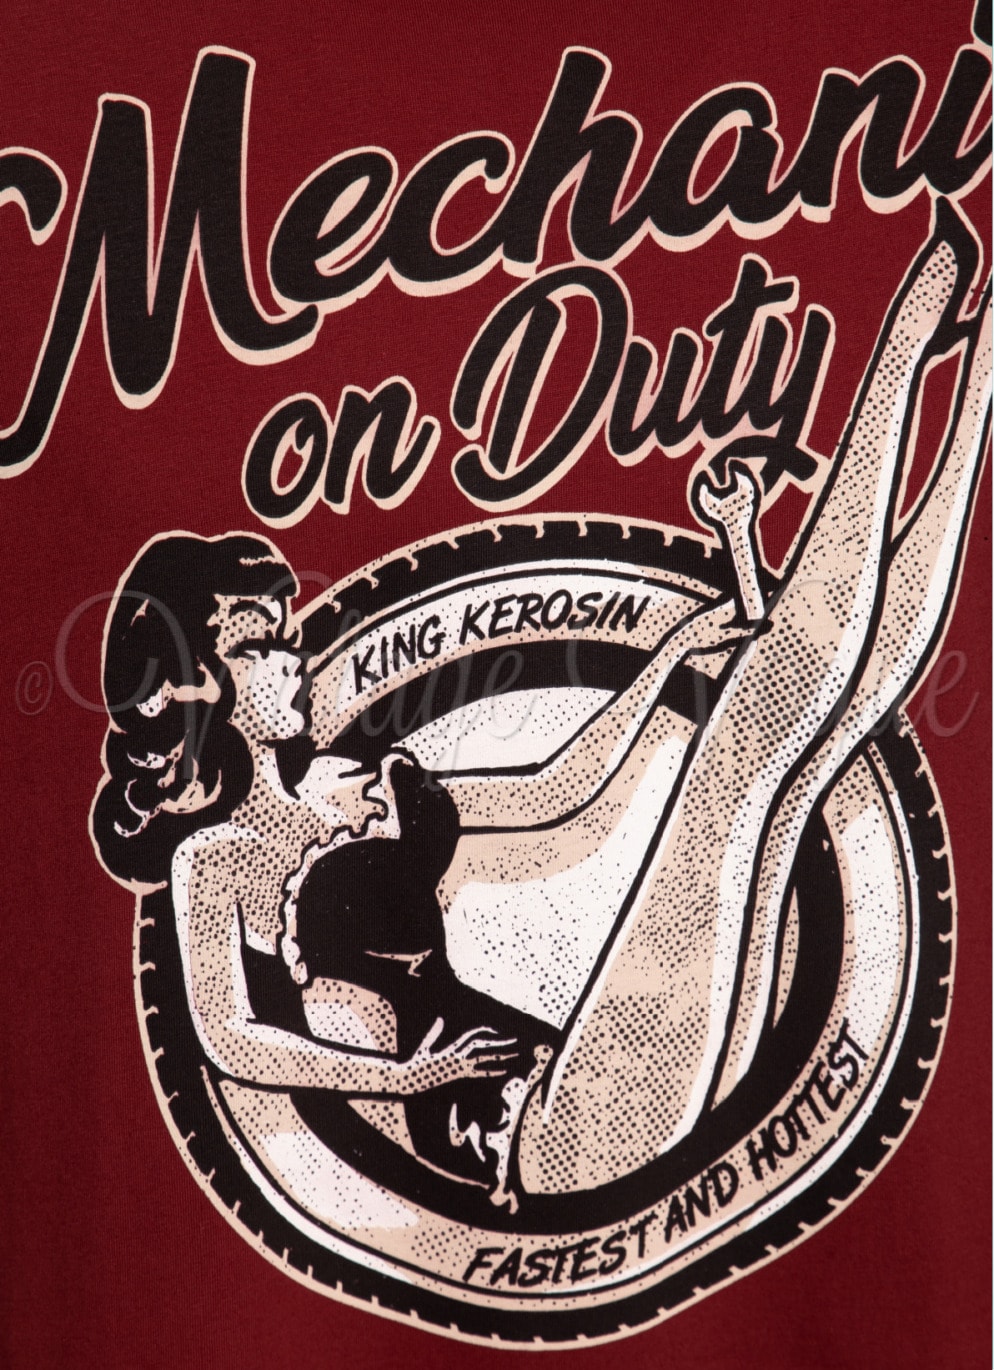 King Kerosin 50er Jahre Retro Rockabilly Herren T-Shirt Mechanic on Duty in Weinrot